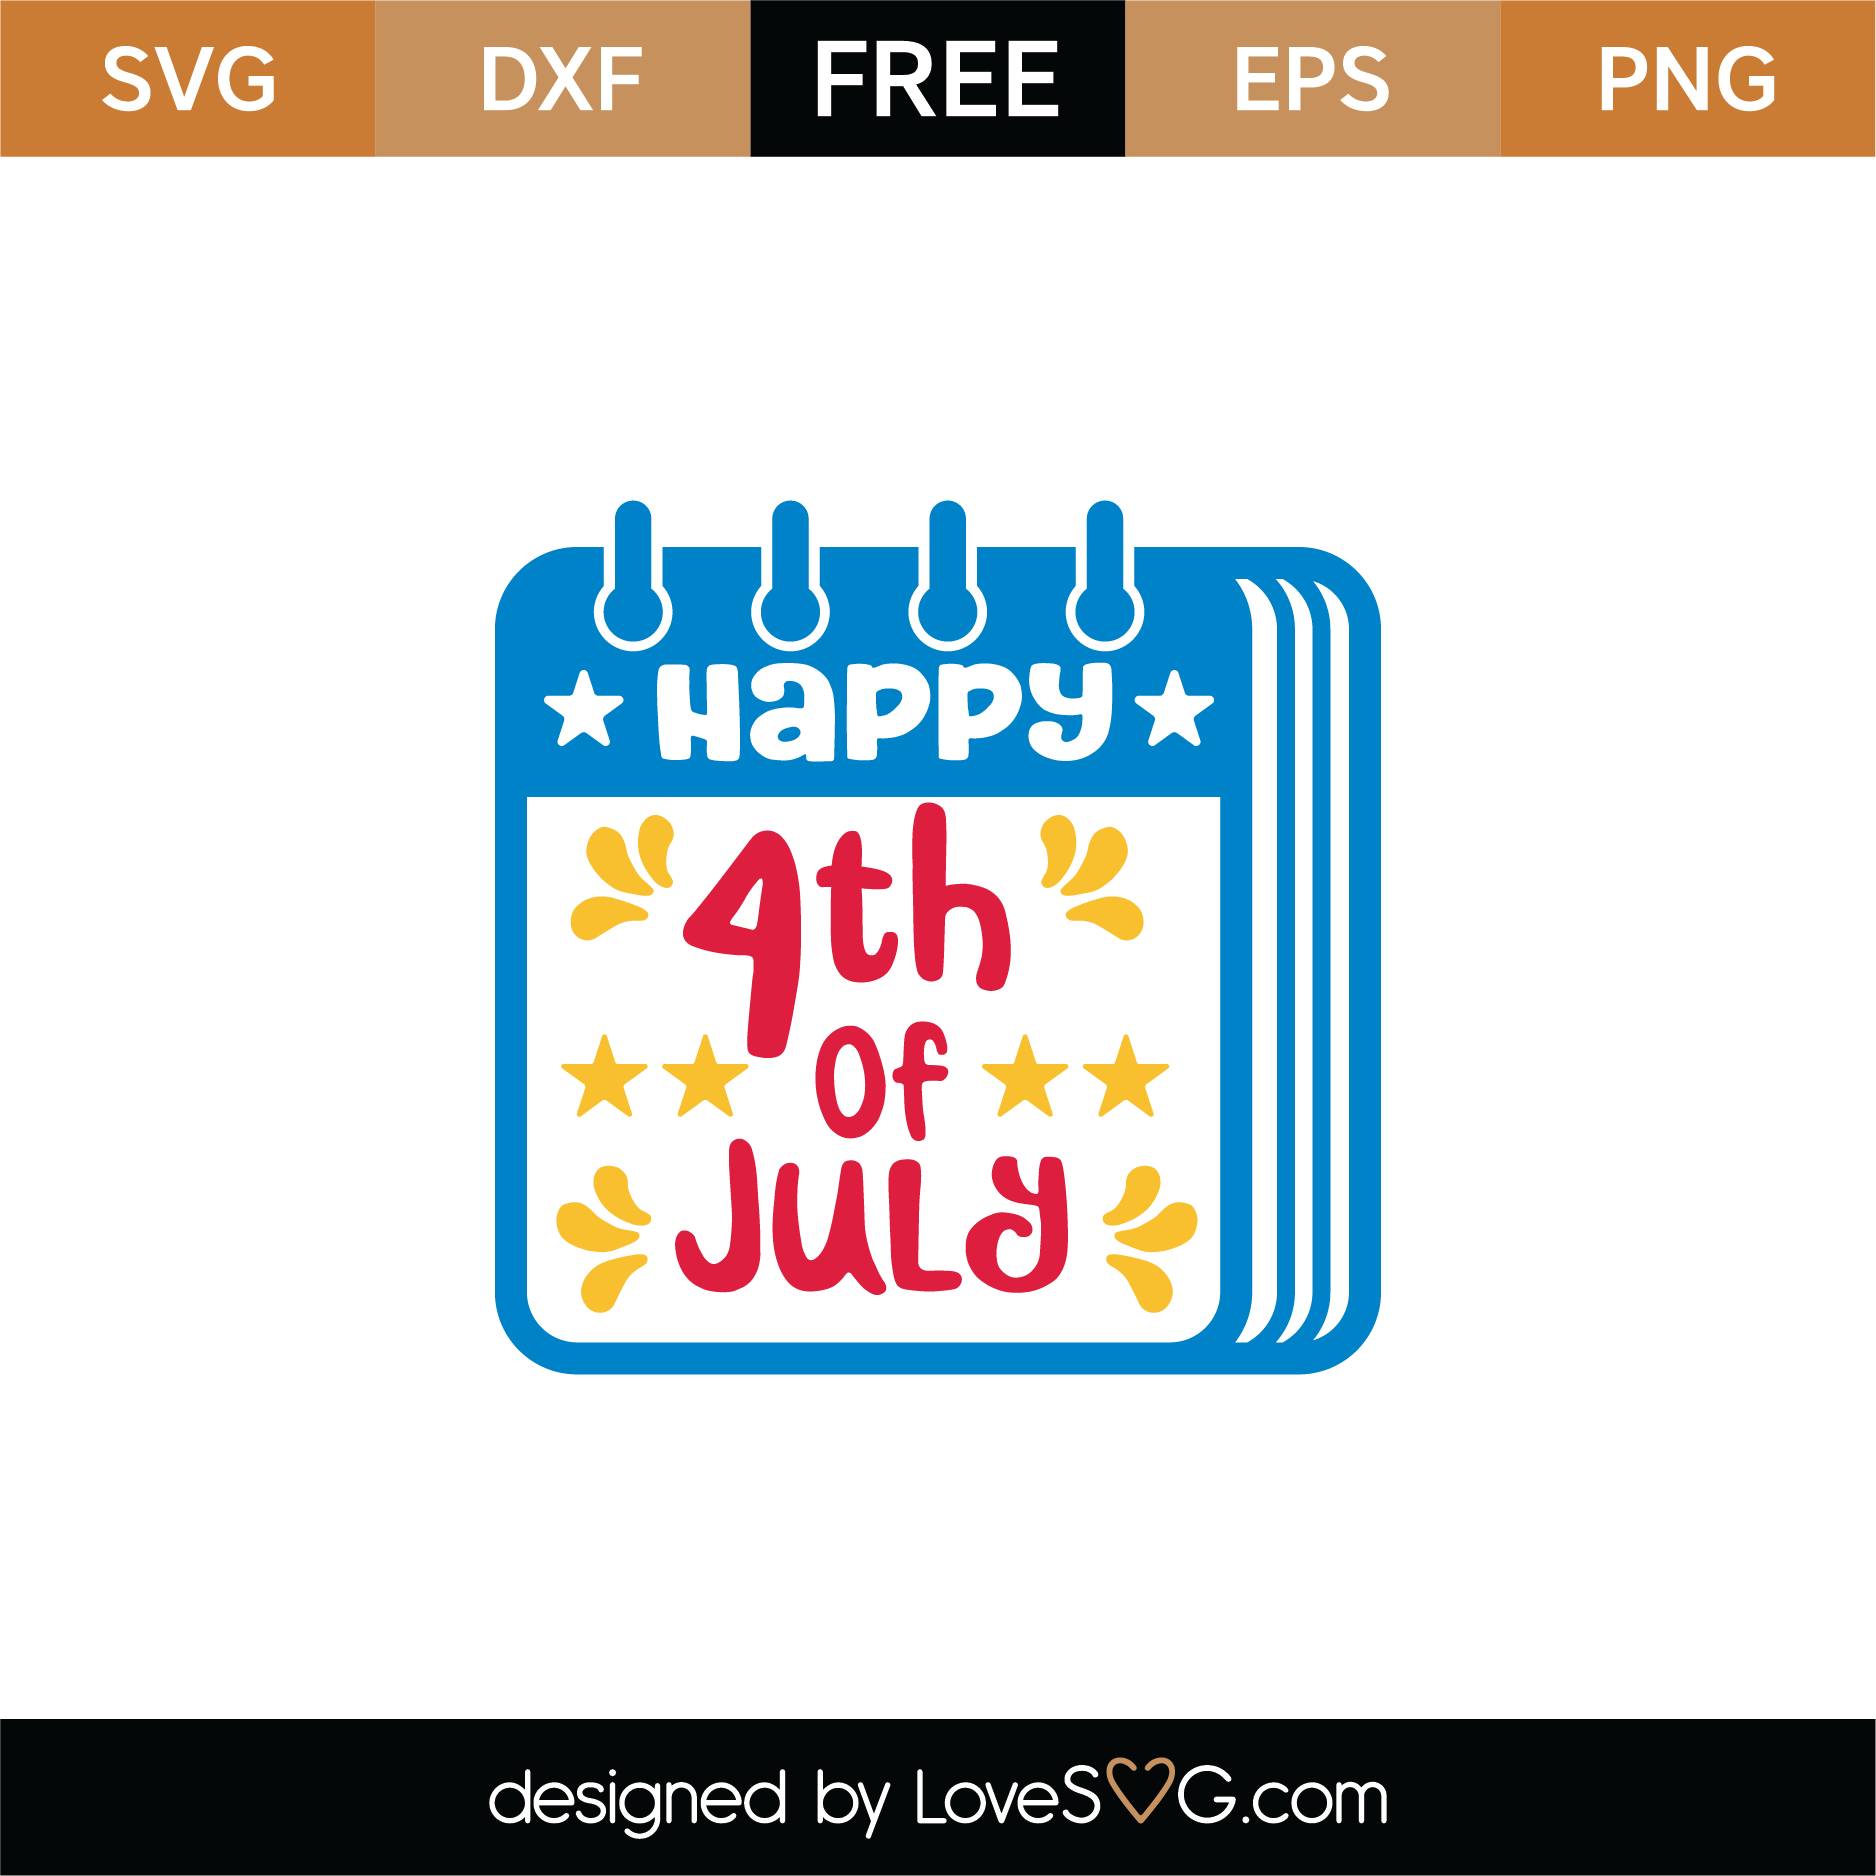 Download Free Happy 4th Of July SVG Cut File | Lovesvg.com